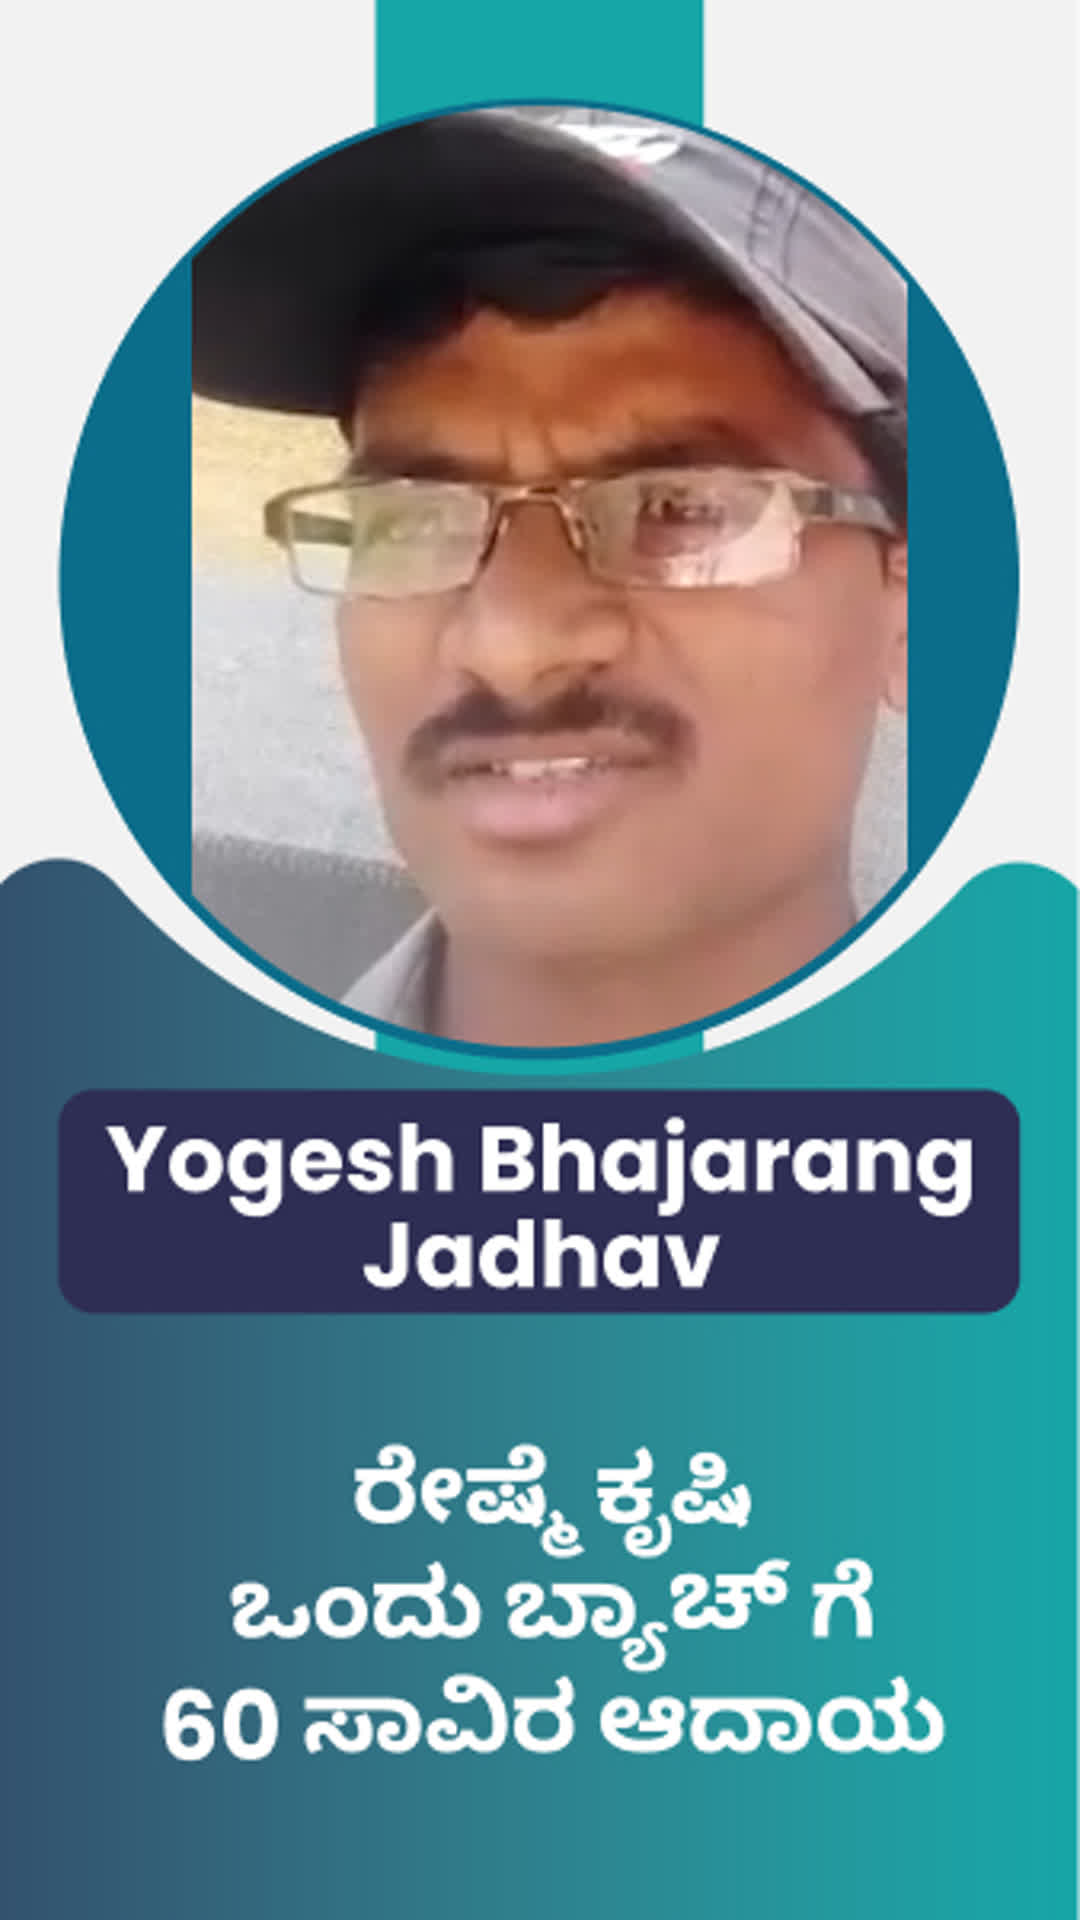 Yogesh Bajarang Jadhav's Honest Review of ffreedom app - Belagavi ,Karnataka